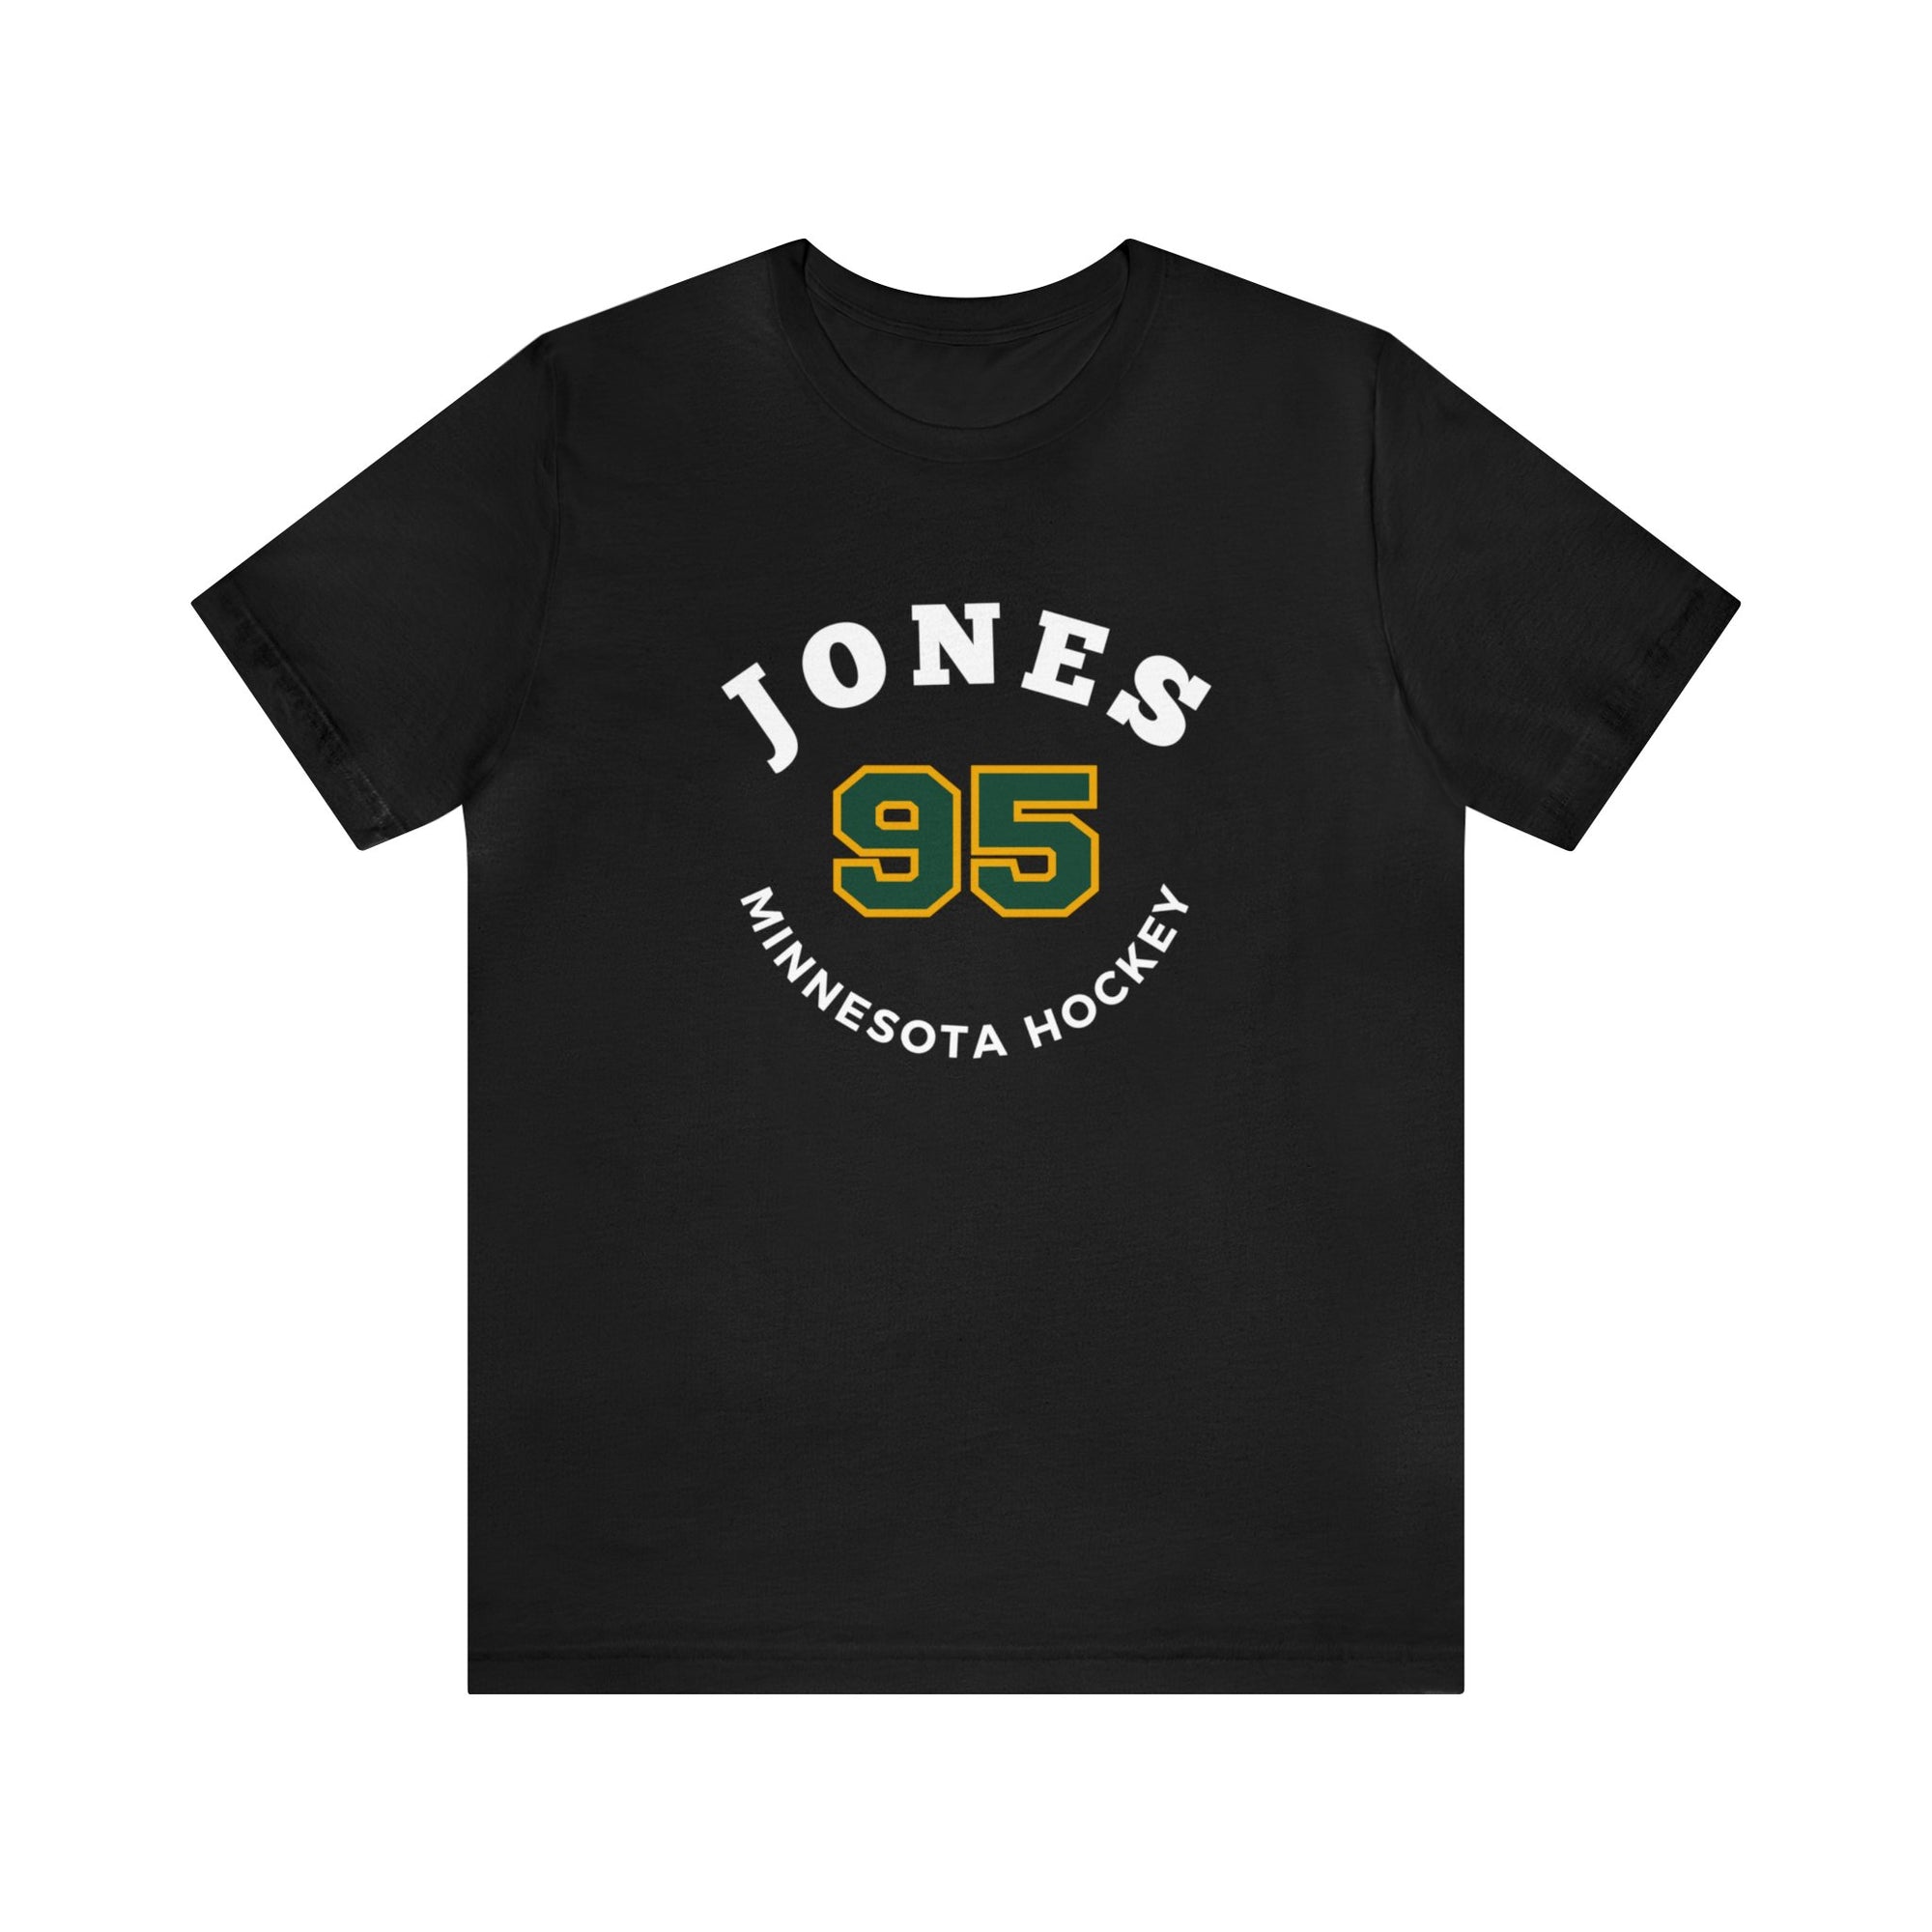 Jones 95 Minnesota Hockey Number Arch Design Unisex T-Shirt